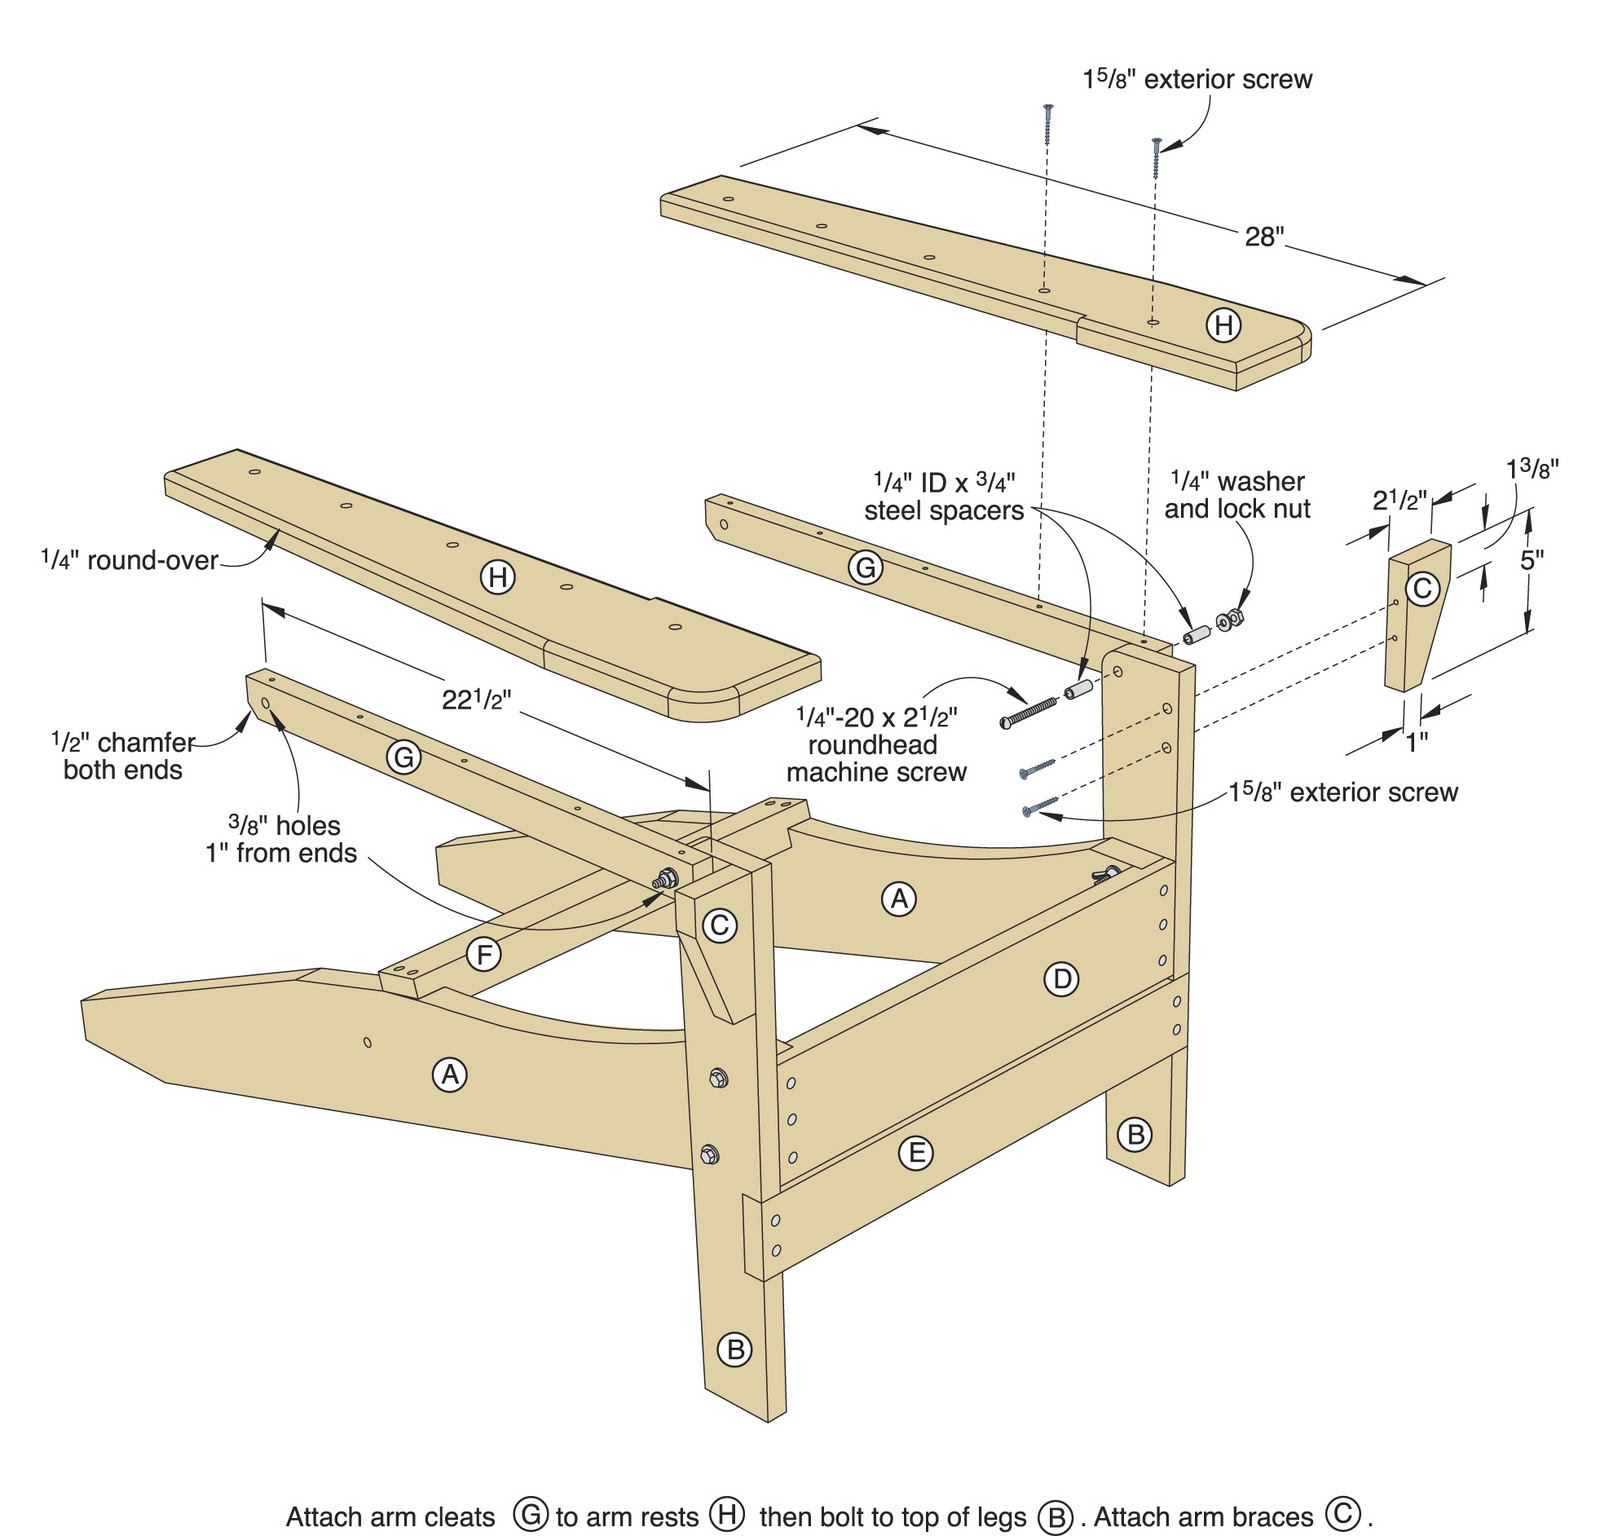 Wood Working: Adirondack chair plans in metric